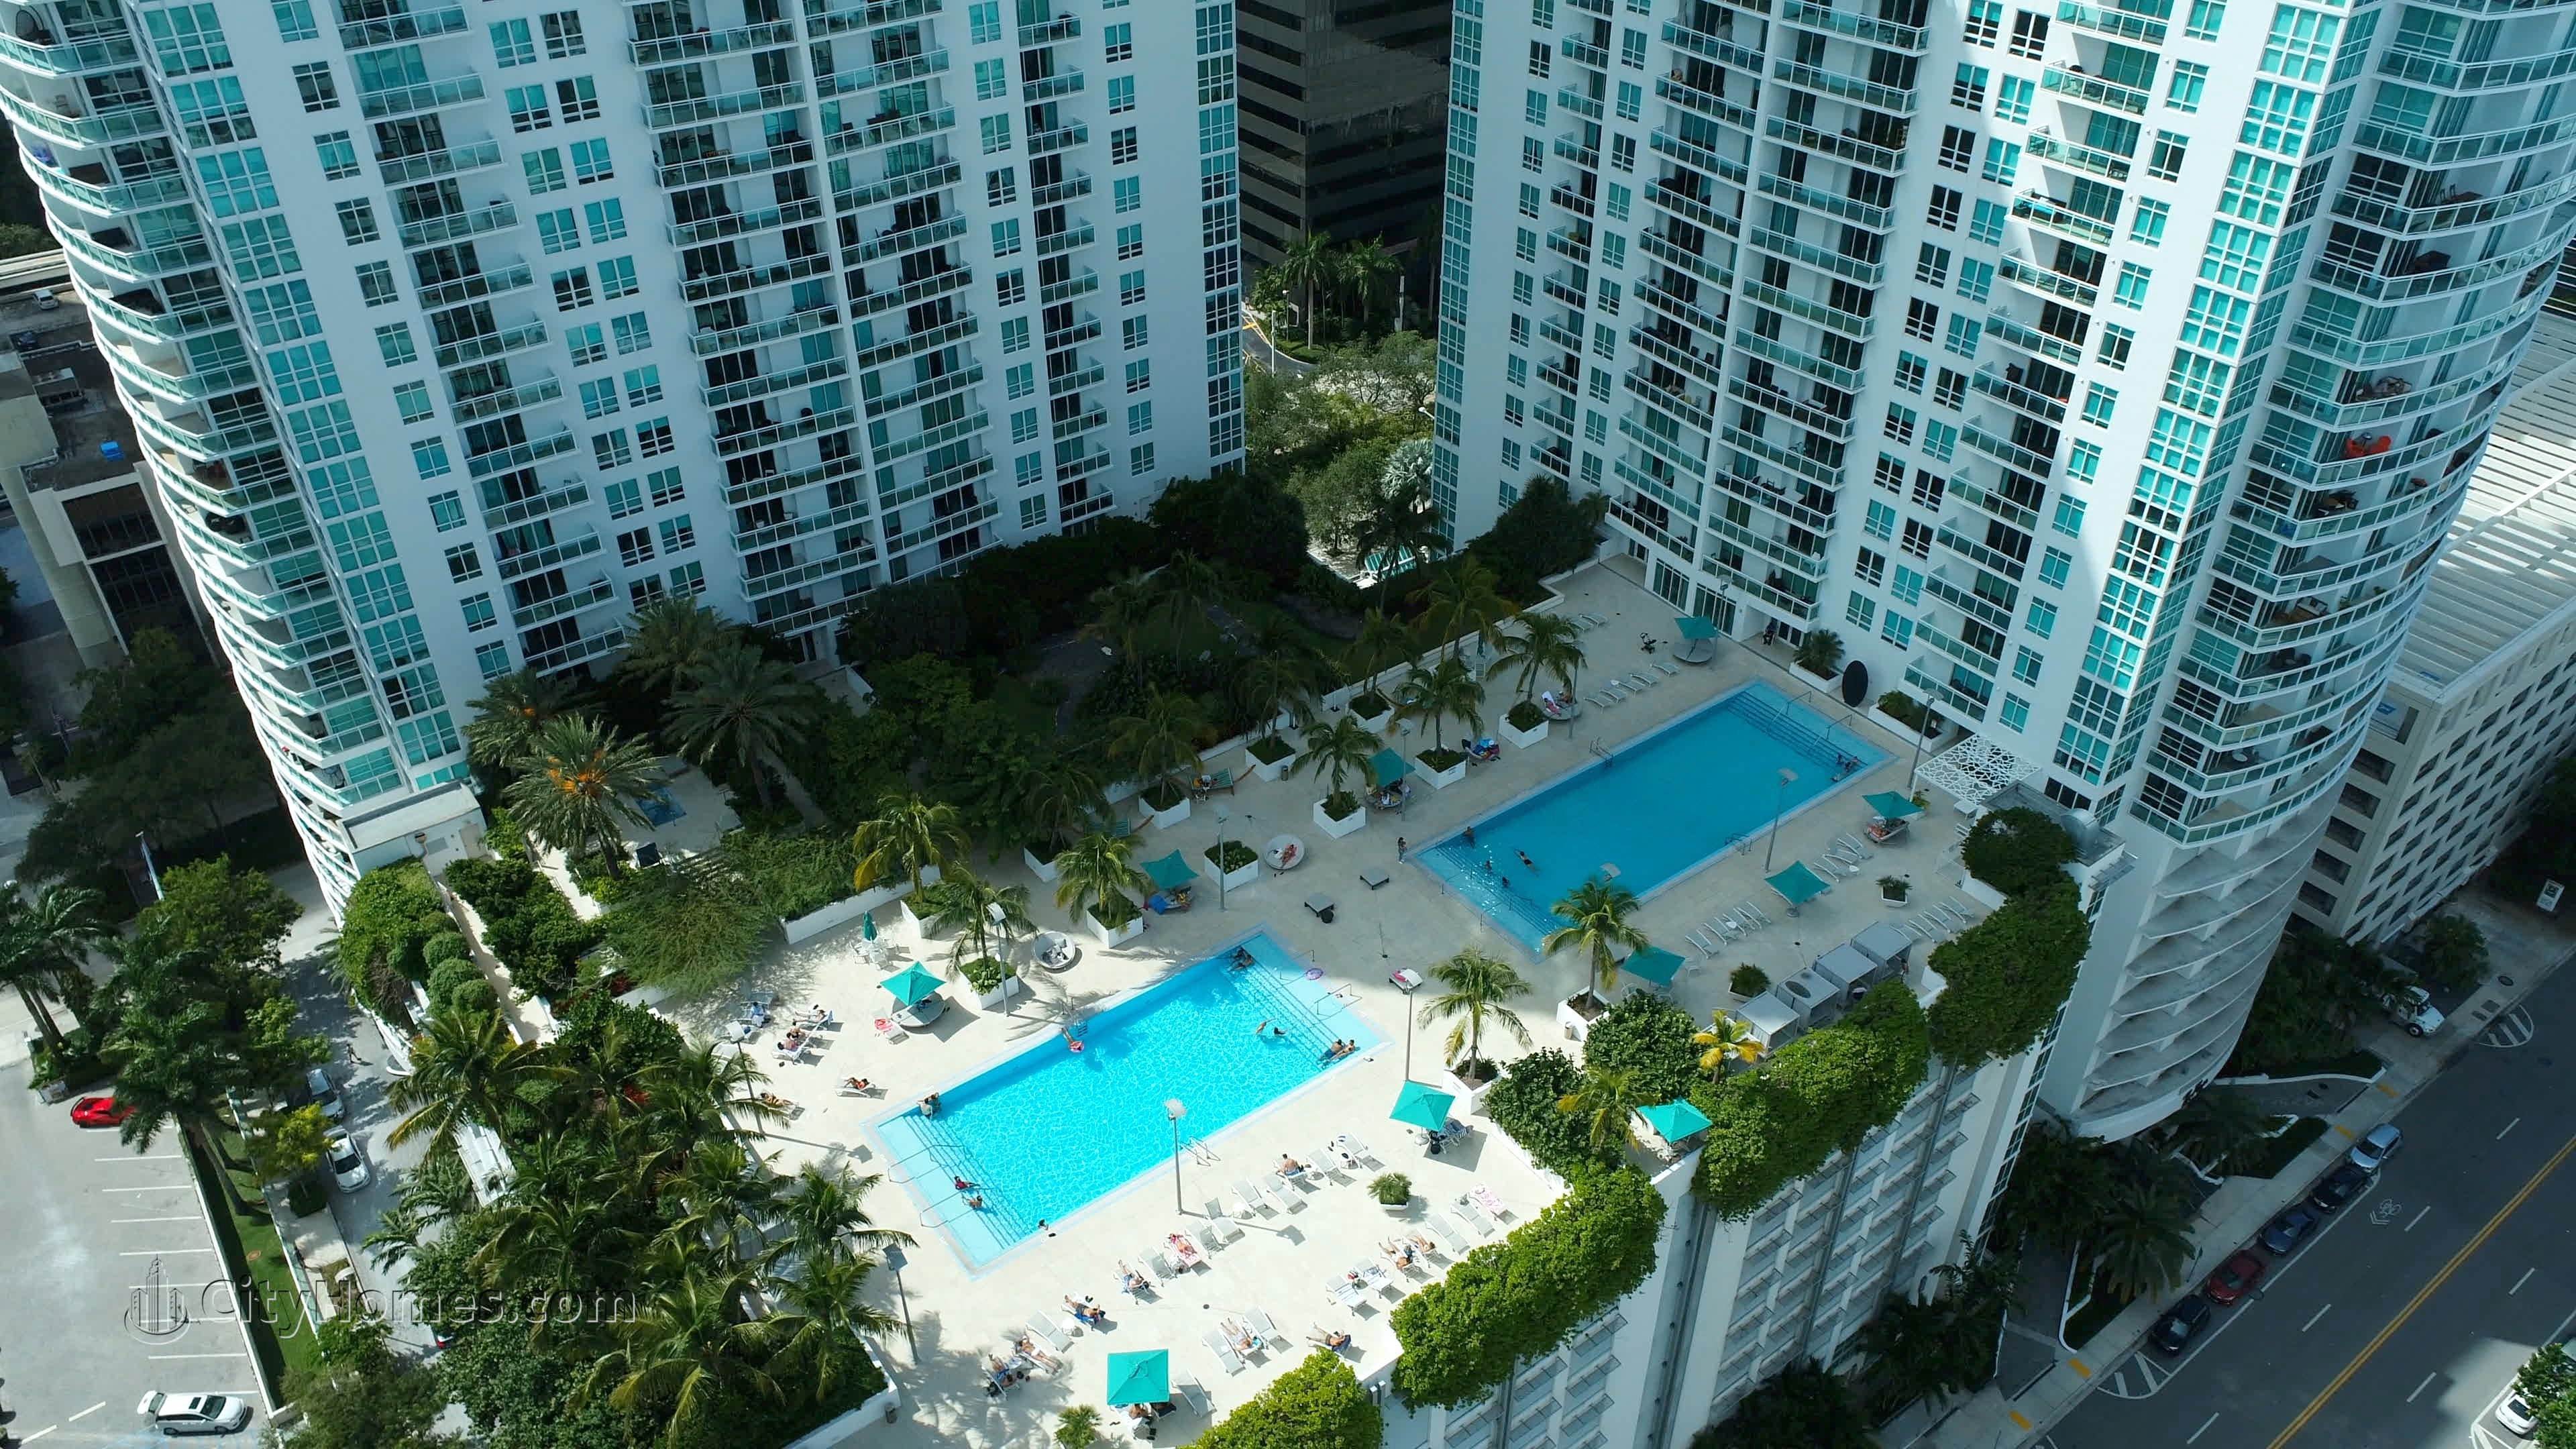 5. Plaza on Brickell - 950 Tower byggnad vid 950 Brickell Bay Drive Avenue, Miami, FL 33131